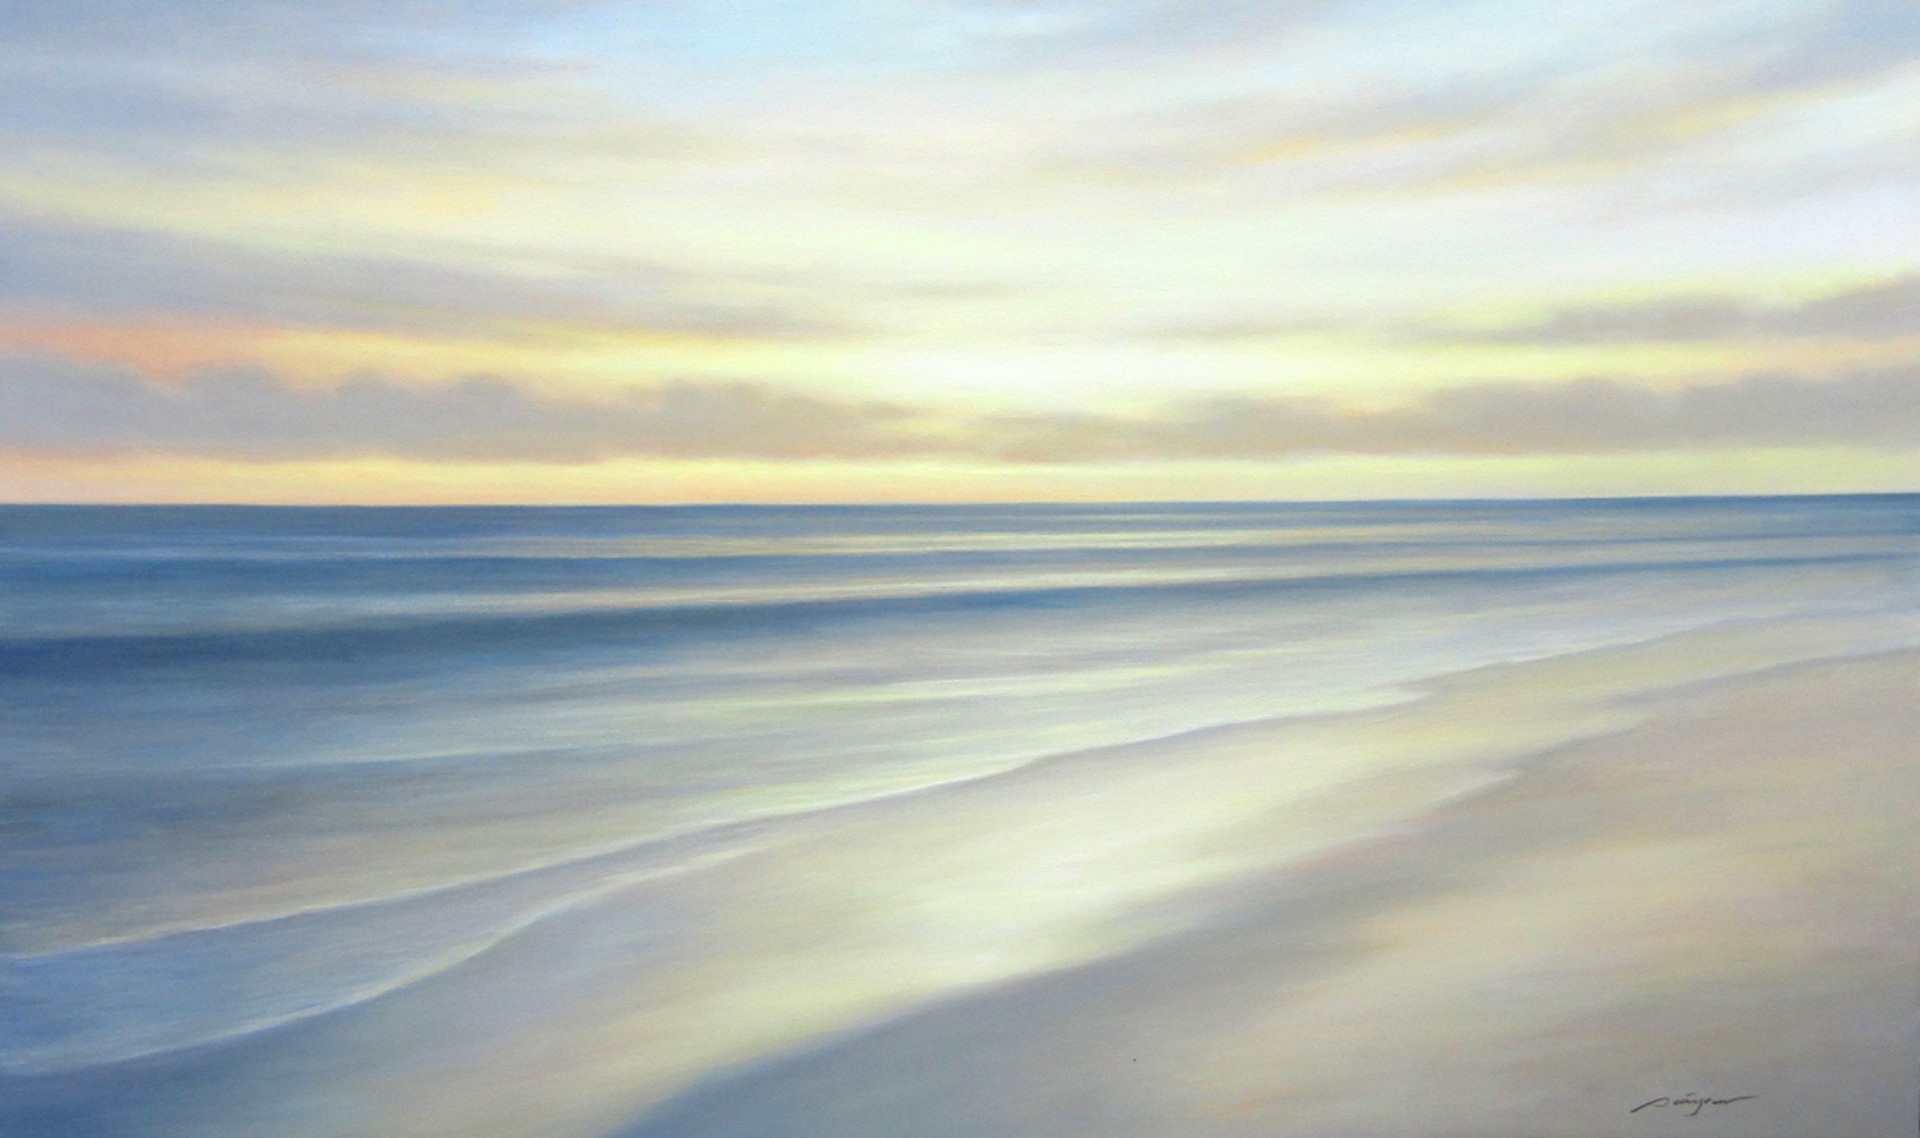 Beachside Serenity by Peter Pettegrew